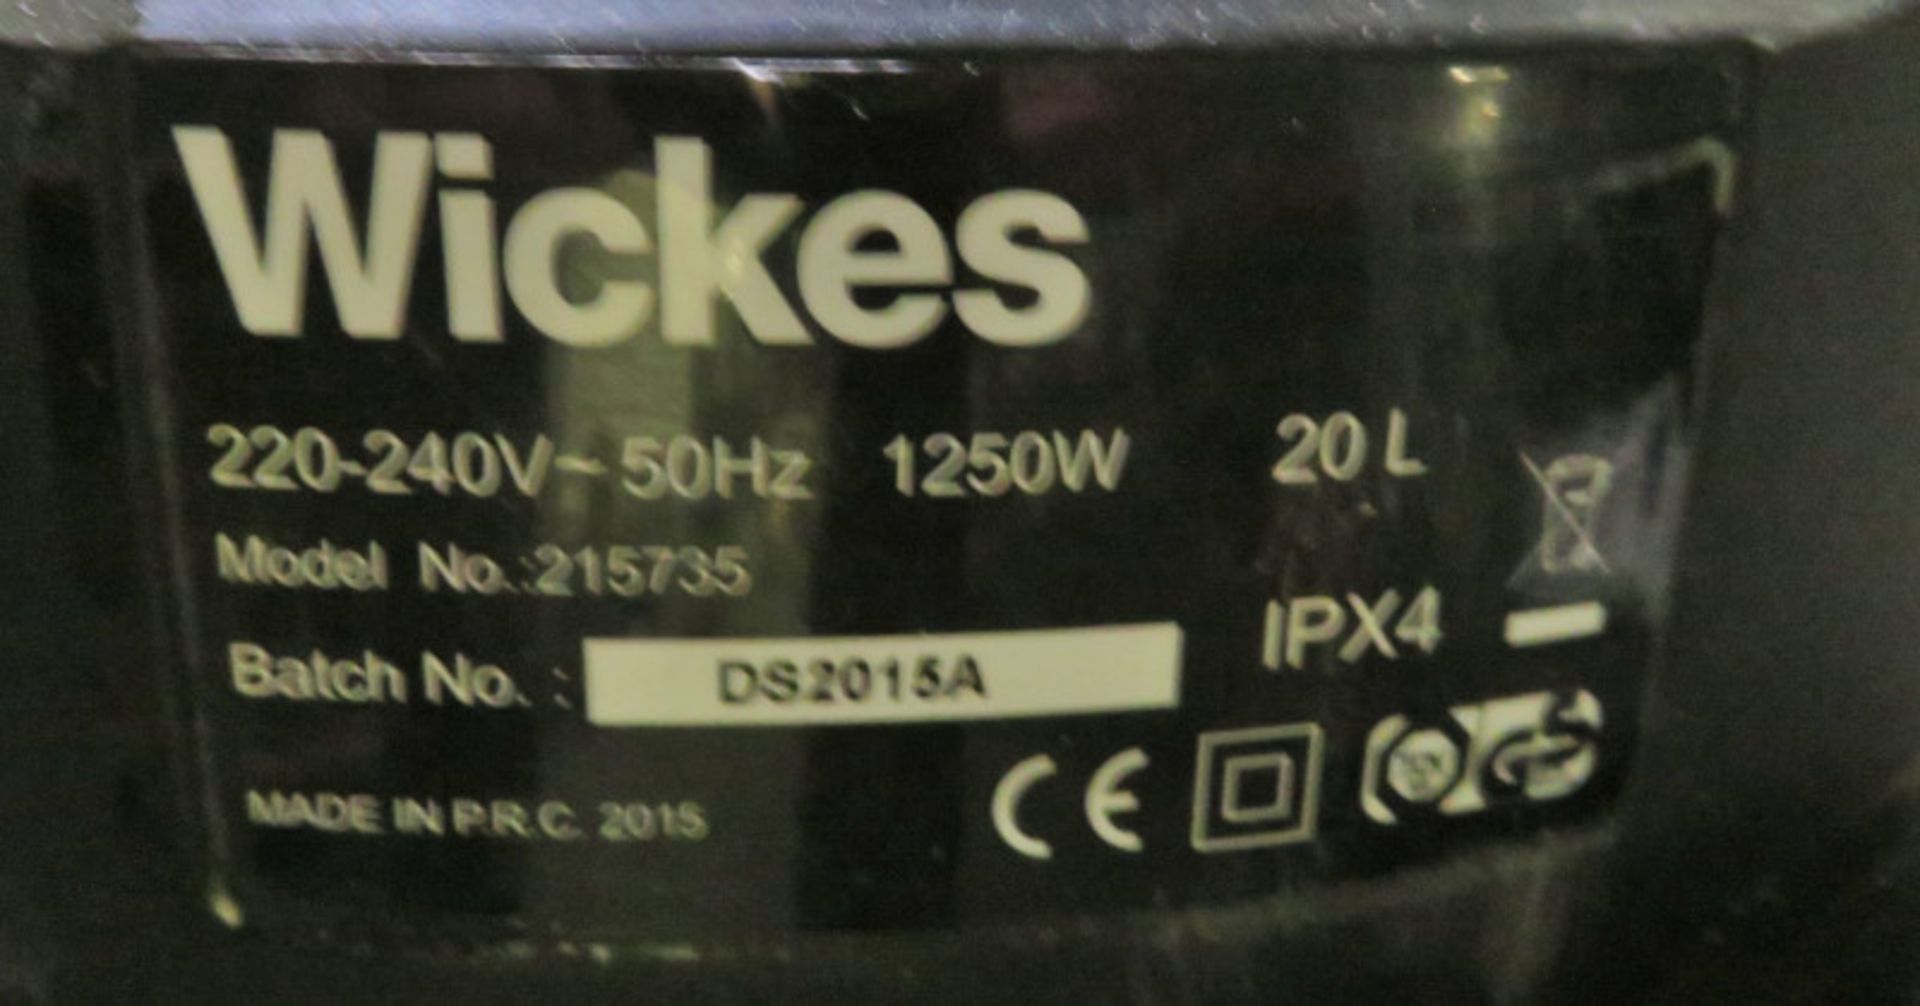 Wickes 20L 1250W model 215735 vacuum cleaner - Image 3 of 4